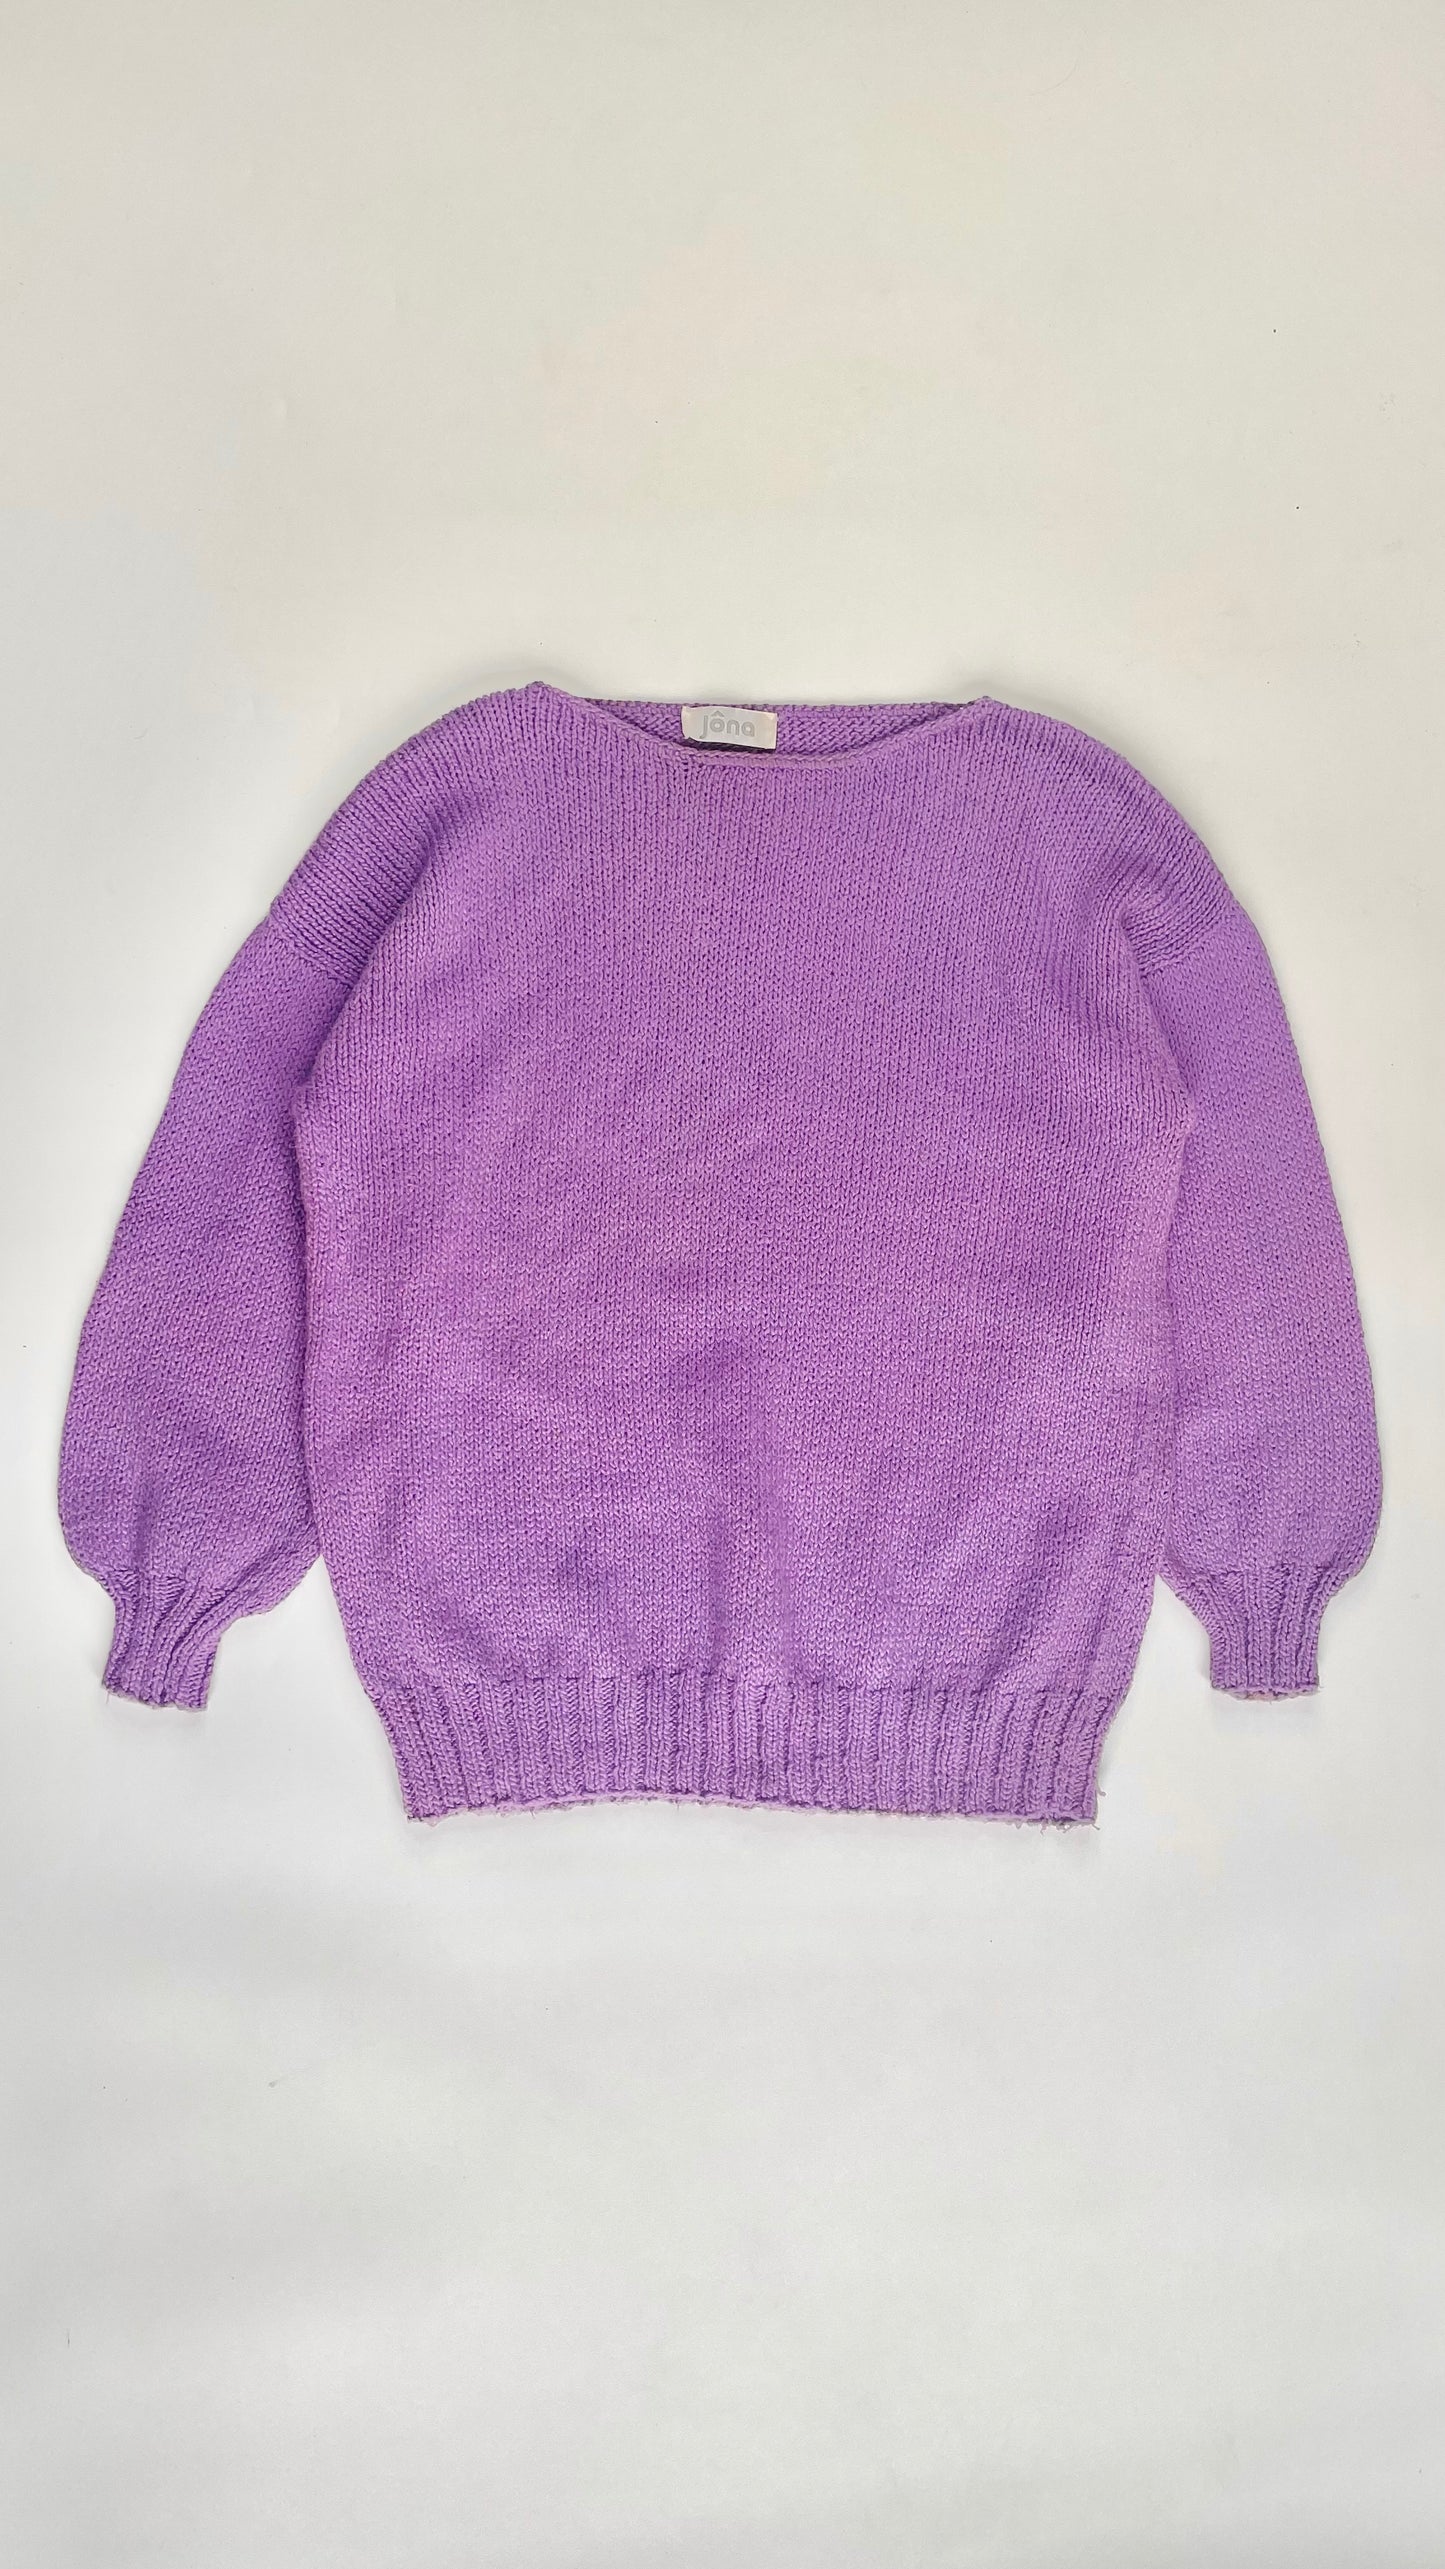 Vintage 90s purple knit sweater- Size M